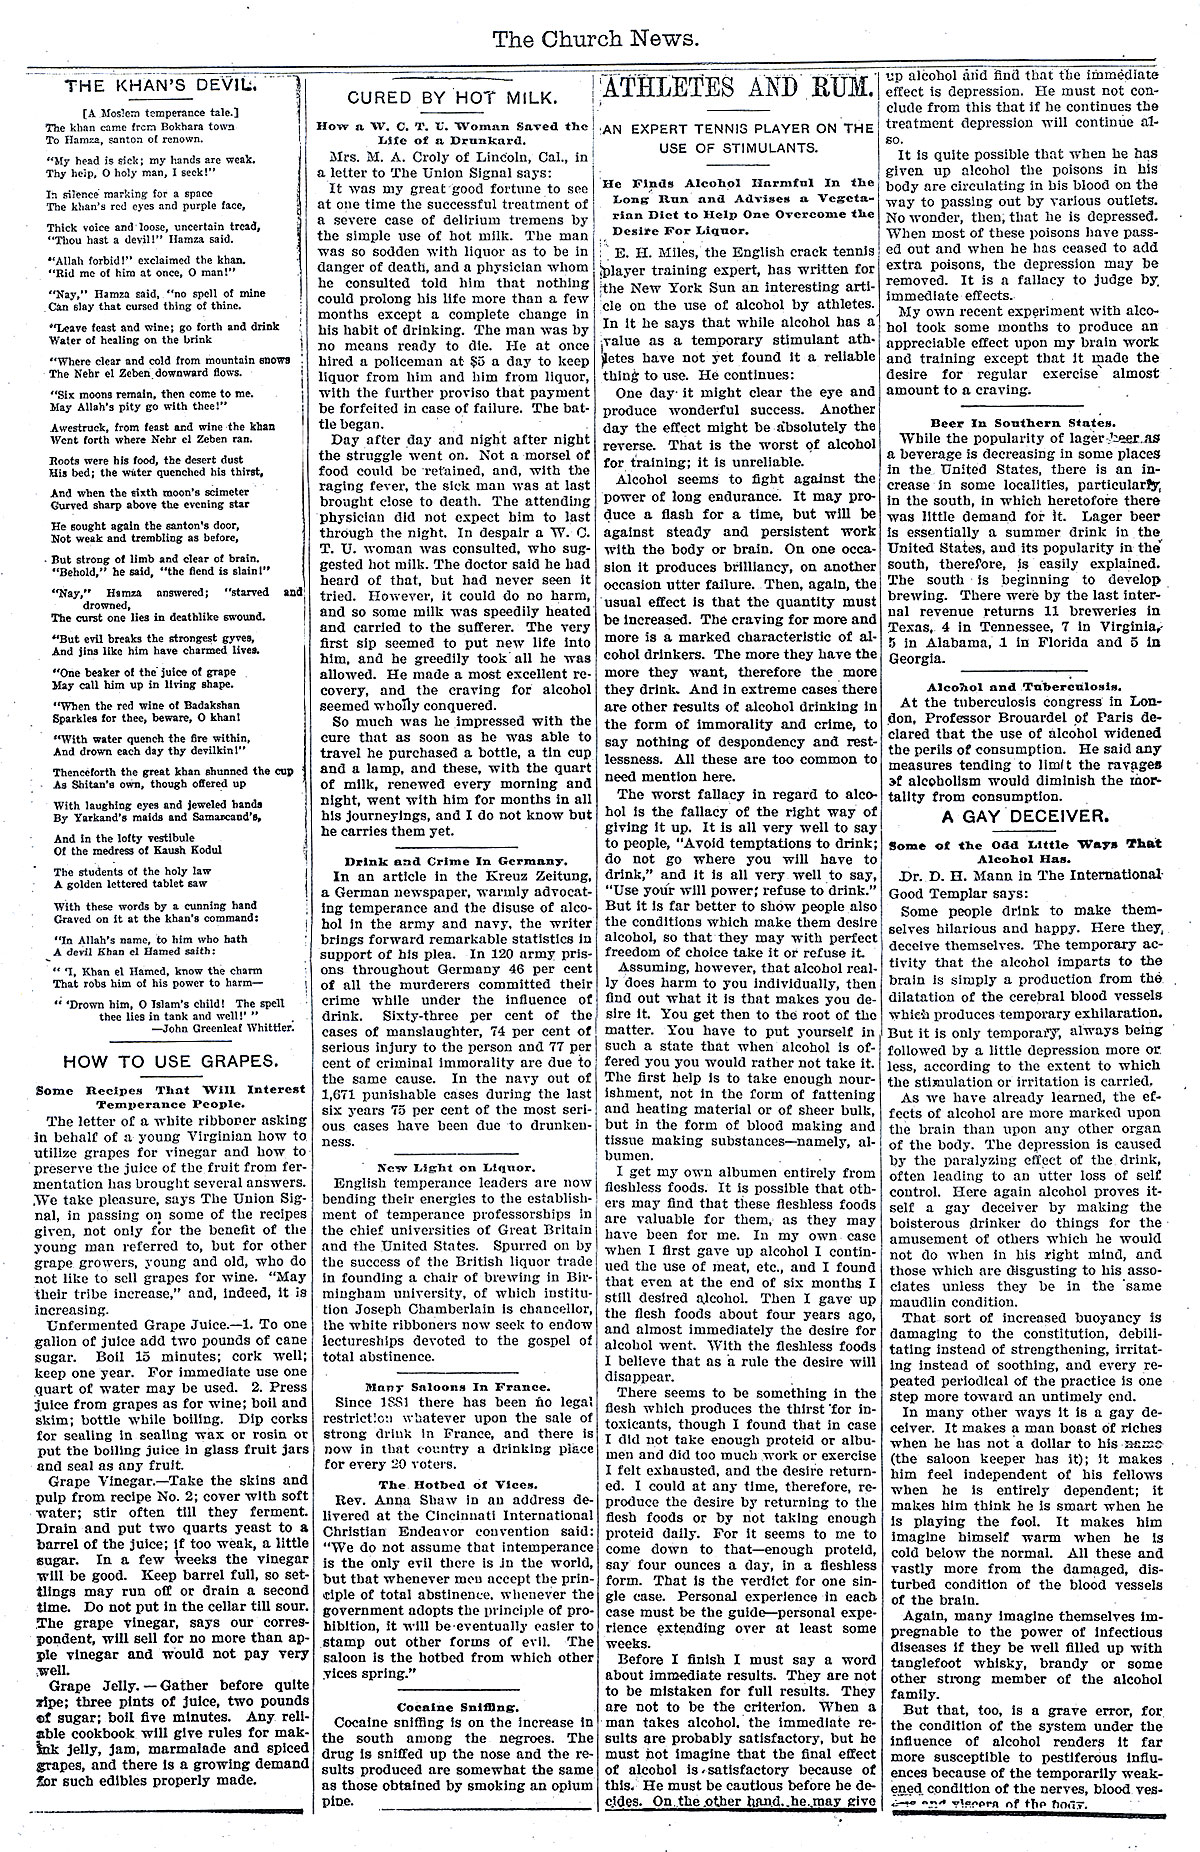 The Church News 1901